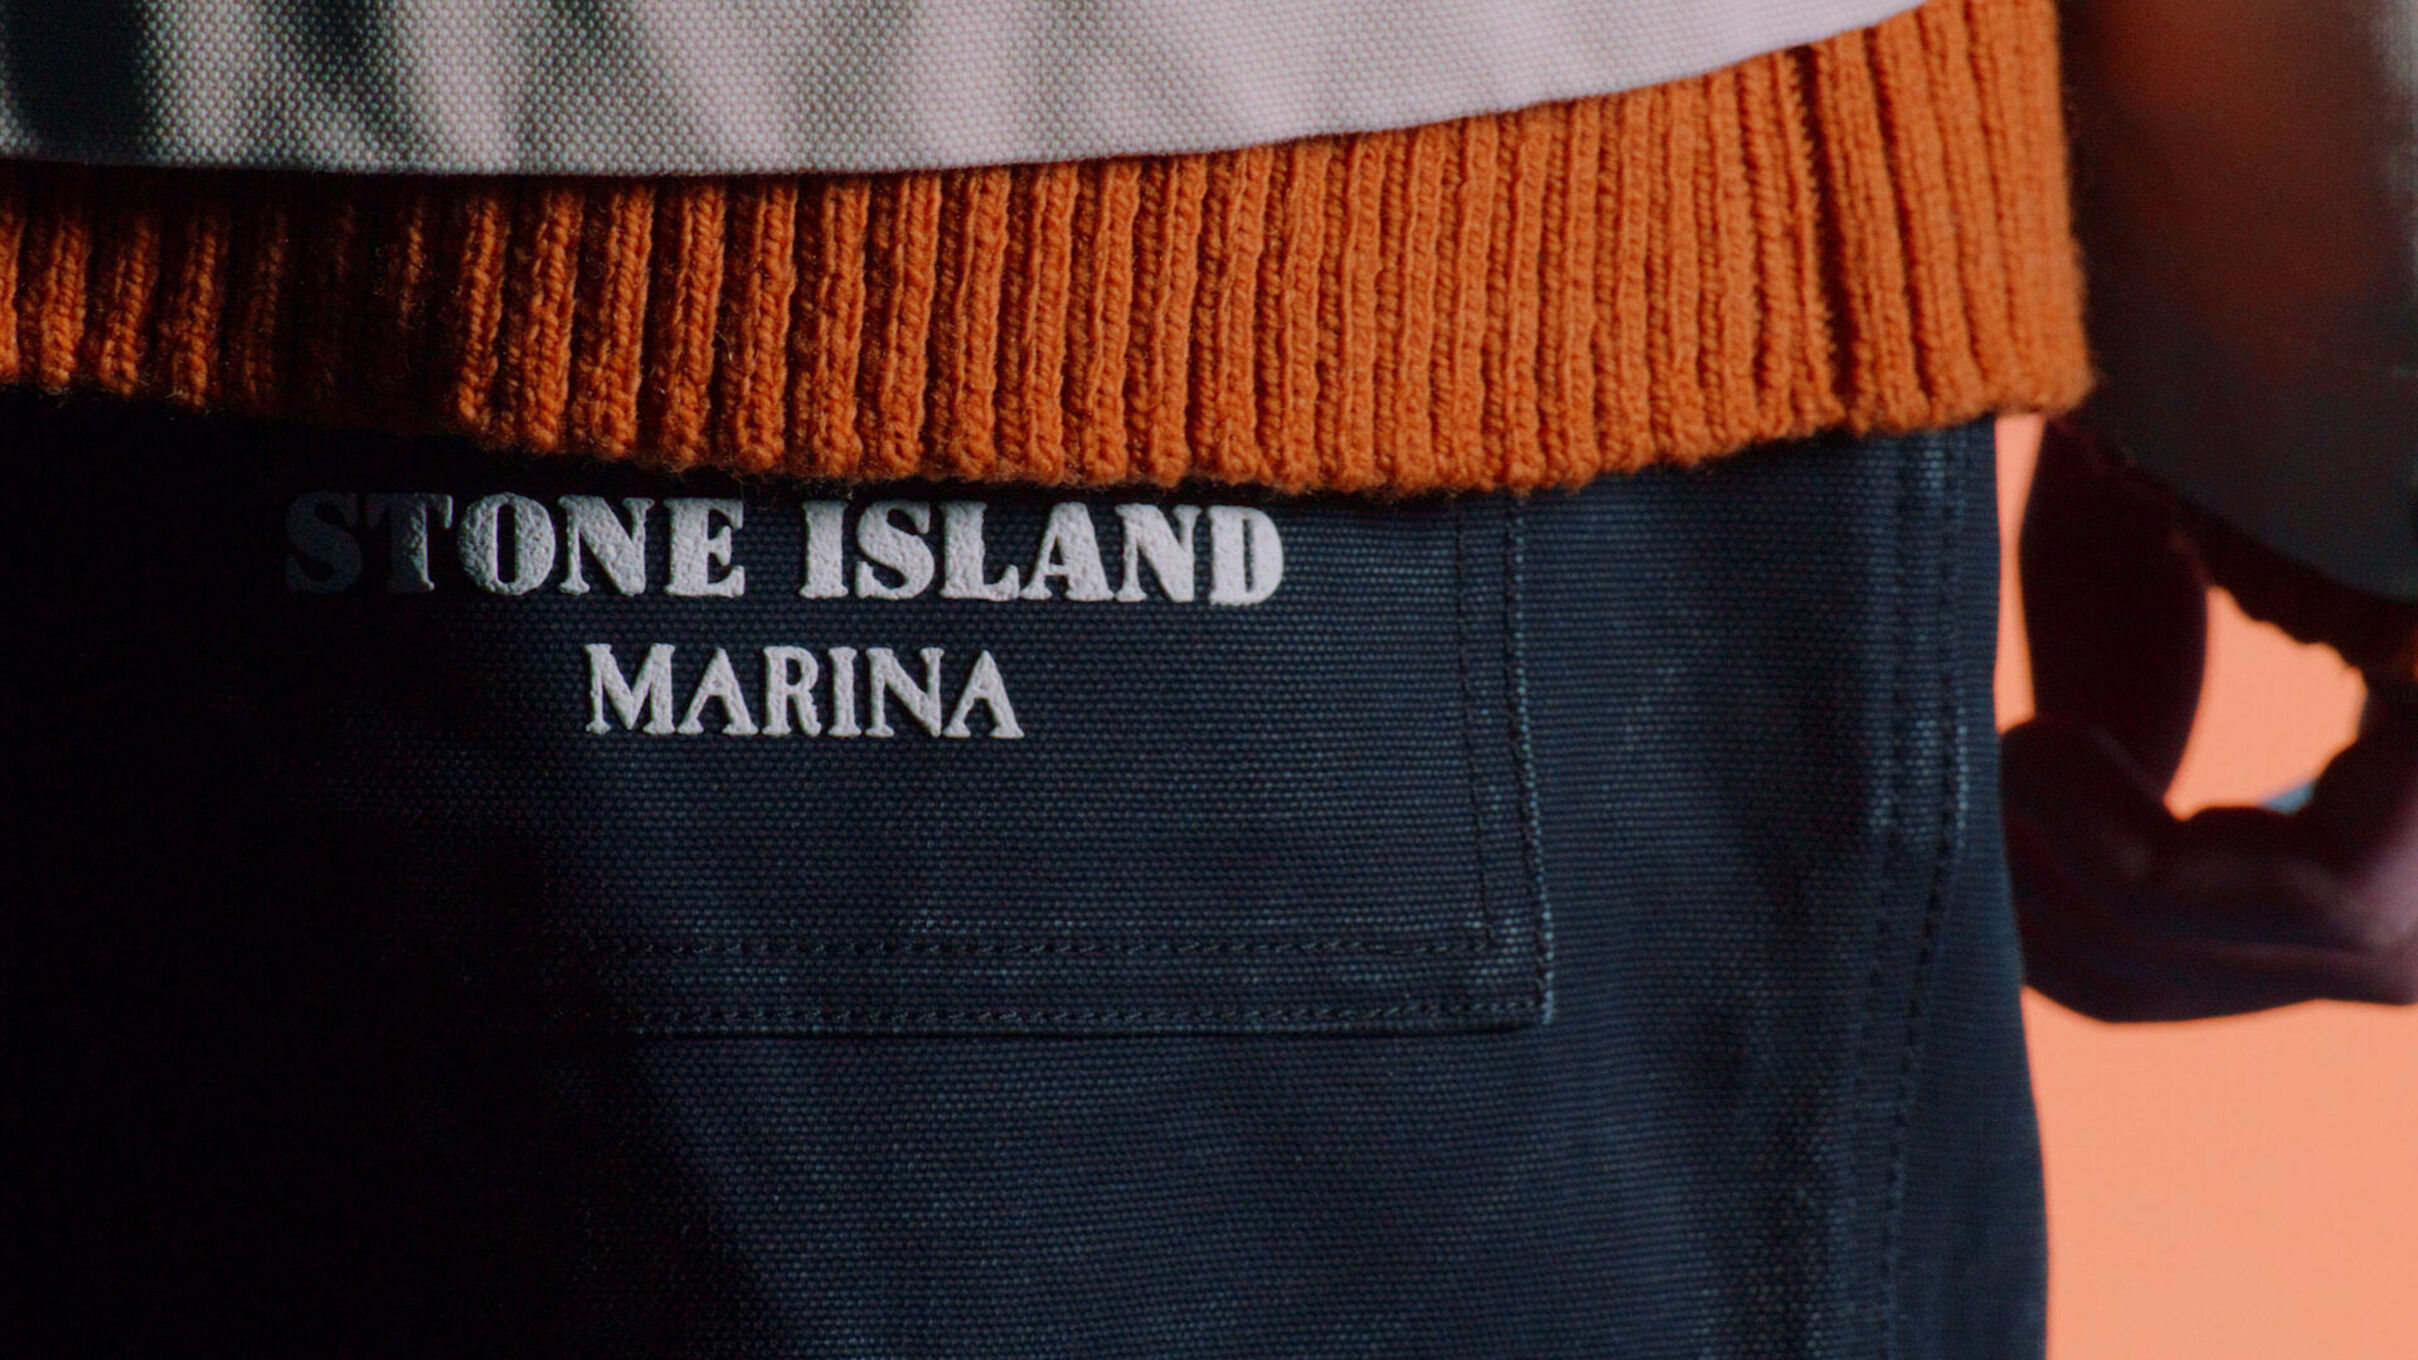 Stone Island Marina | Official Store